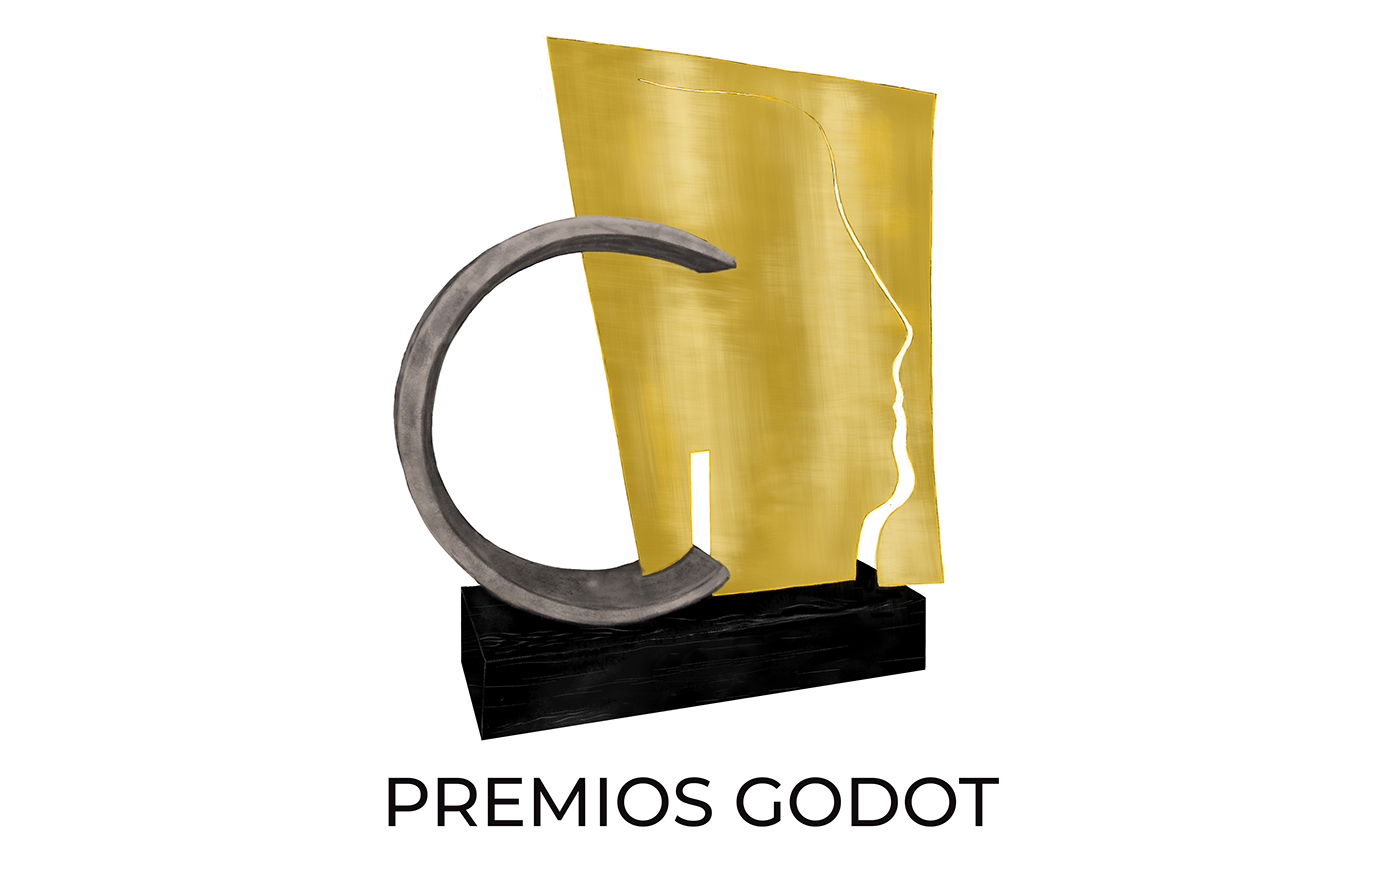 Premios Godot logo